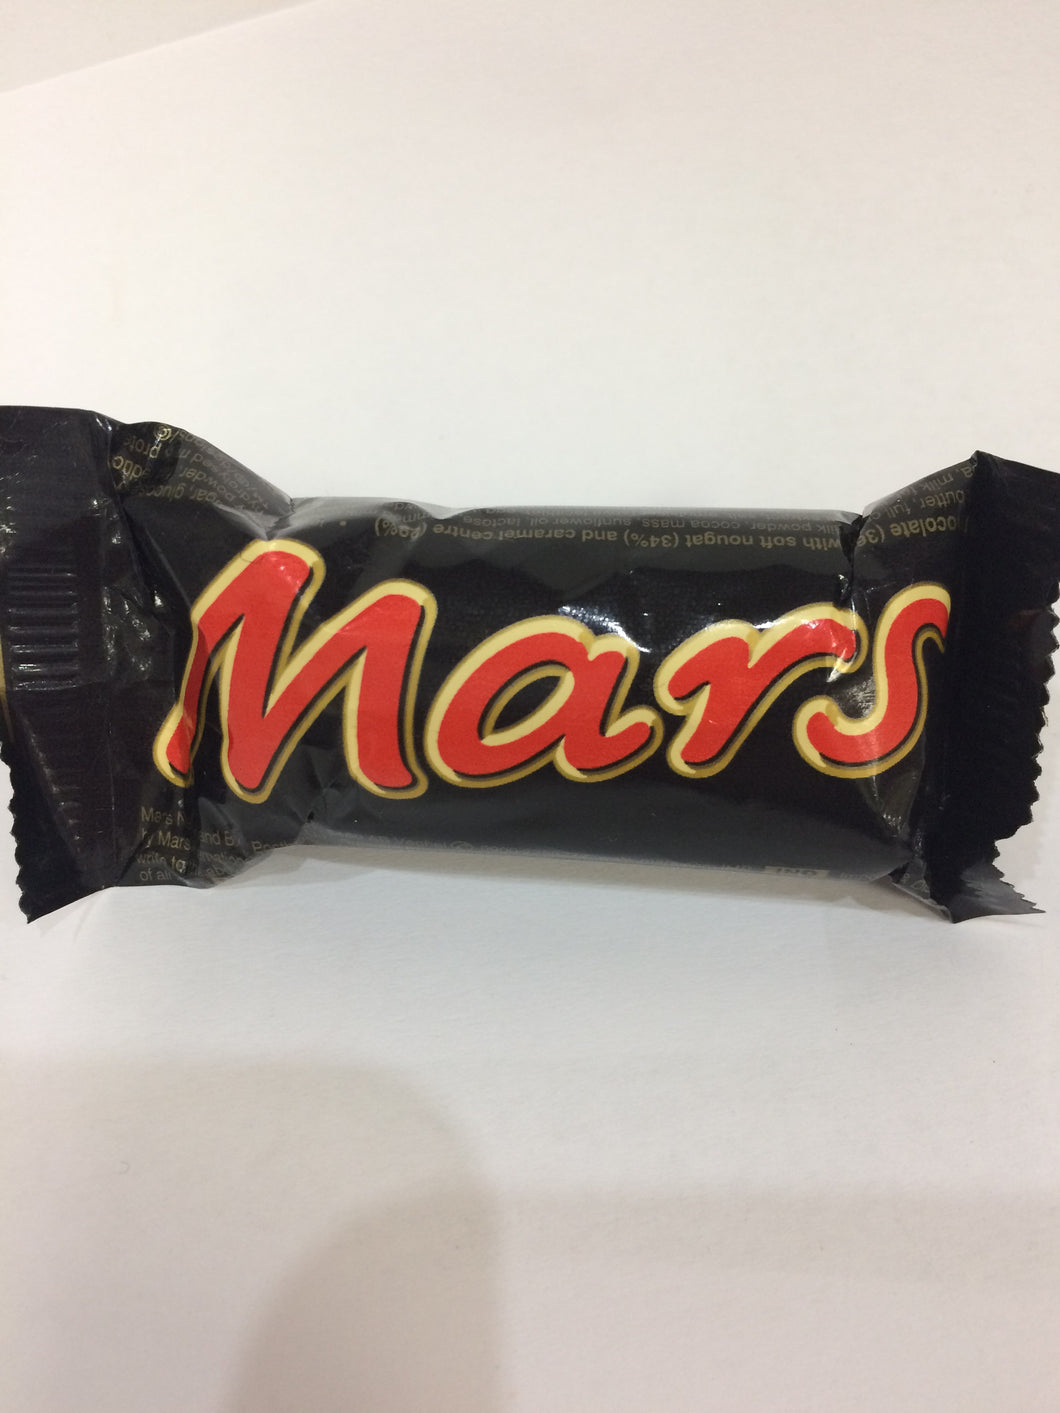 10x Mars fun size bars 18g